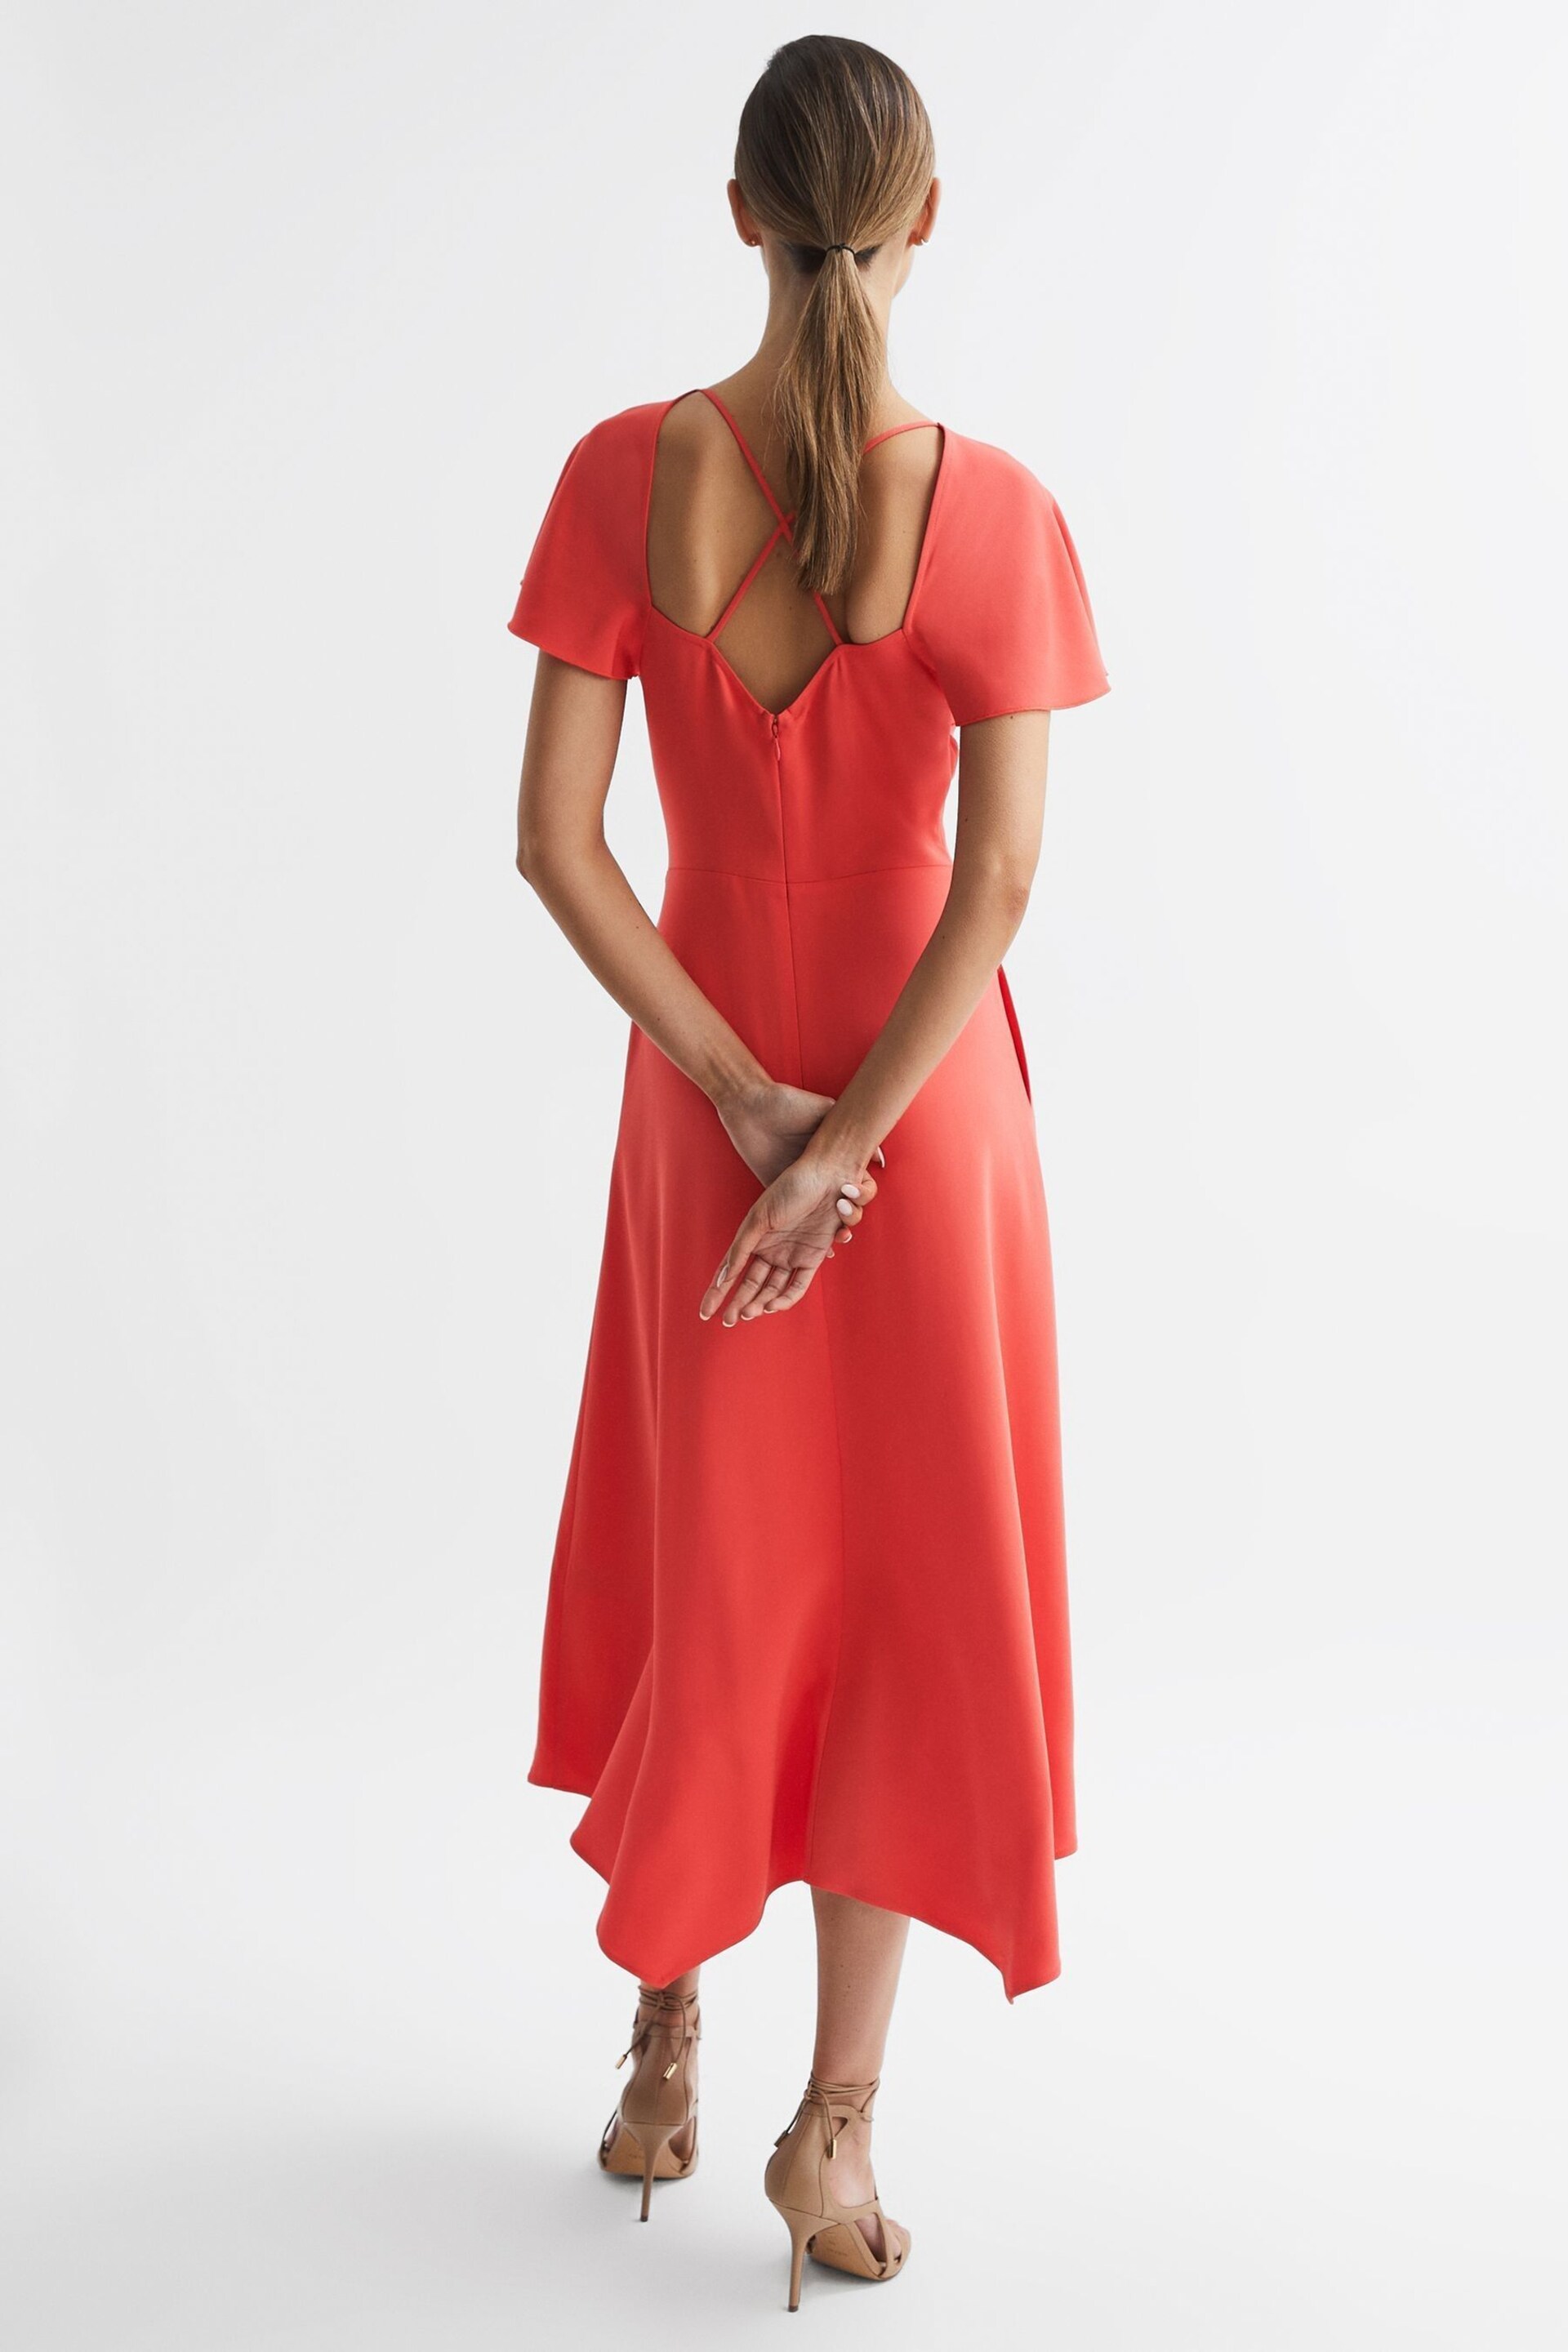 Reiss Coral Eleni Cap Sleeve Maxi Dress - Image 3 of 6